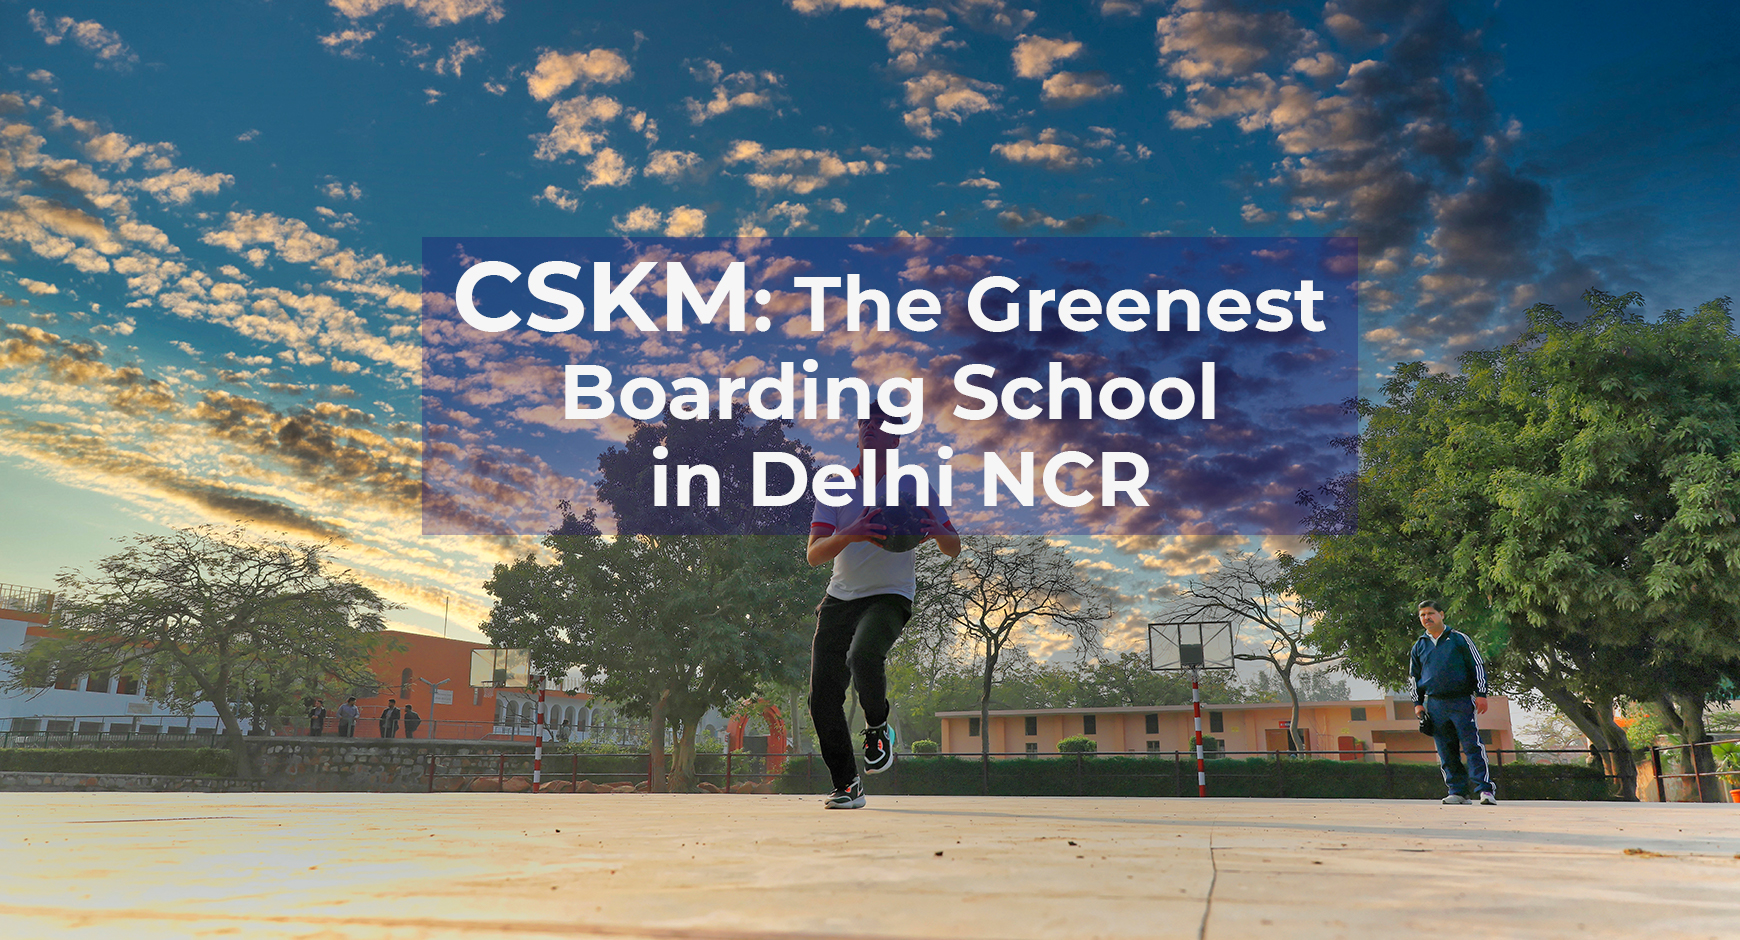 CSKM: The Greenest Boarding School in Delhi NCR